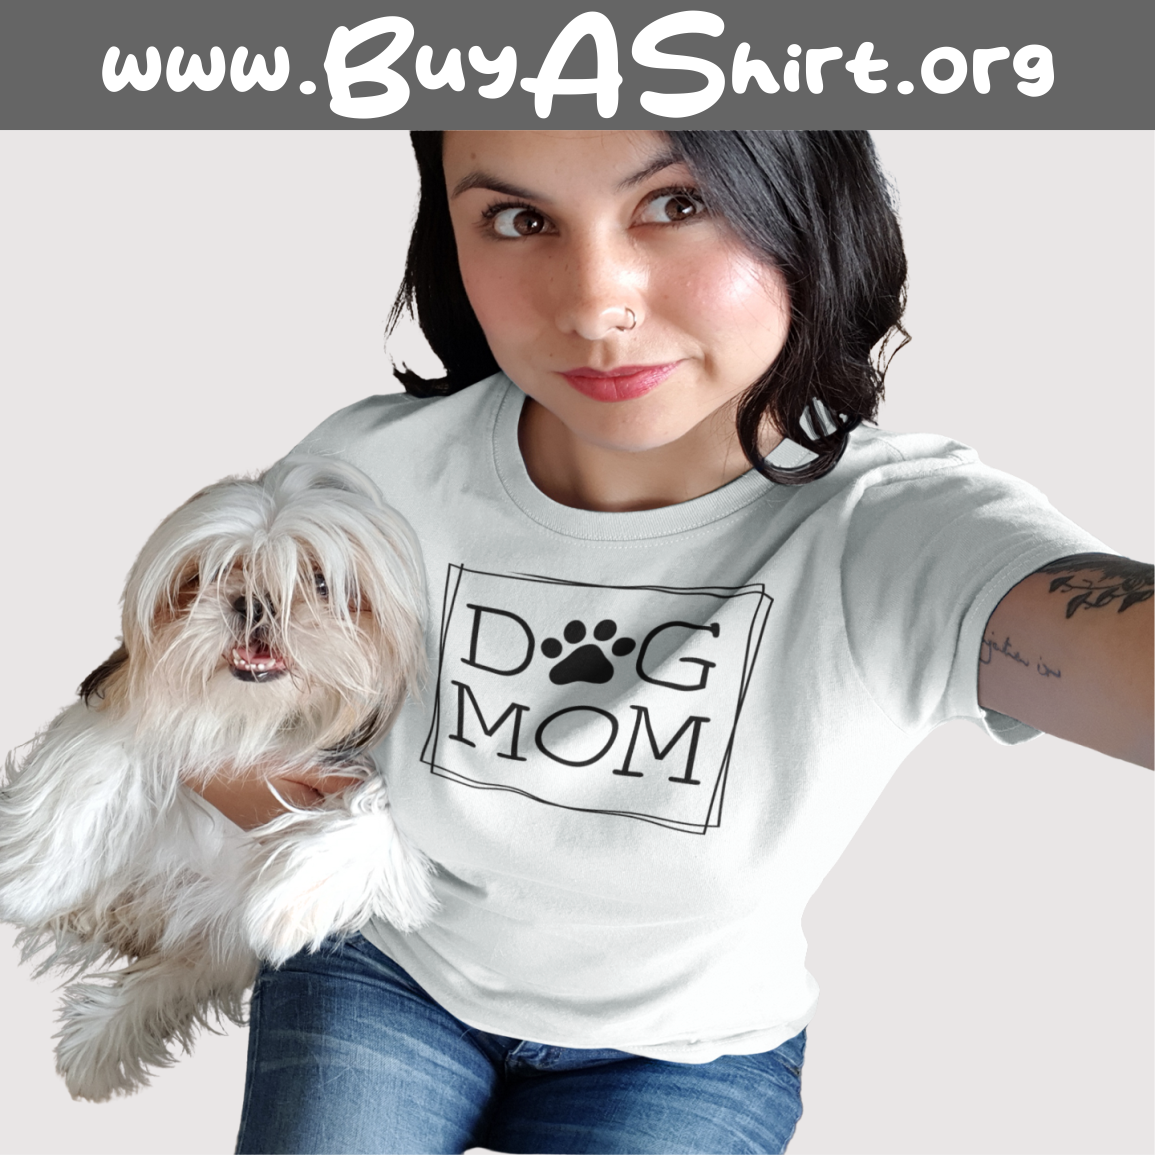 Dog Mom Black Print T-Shirt